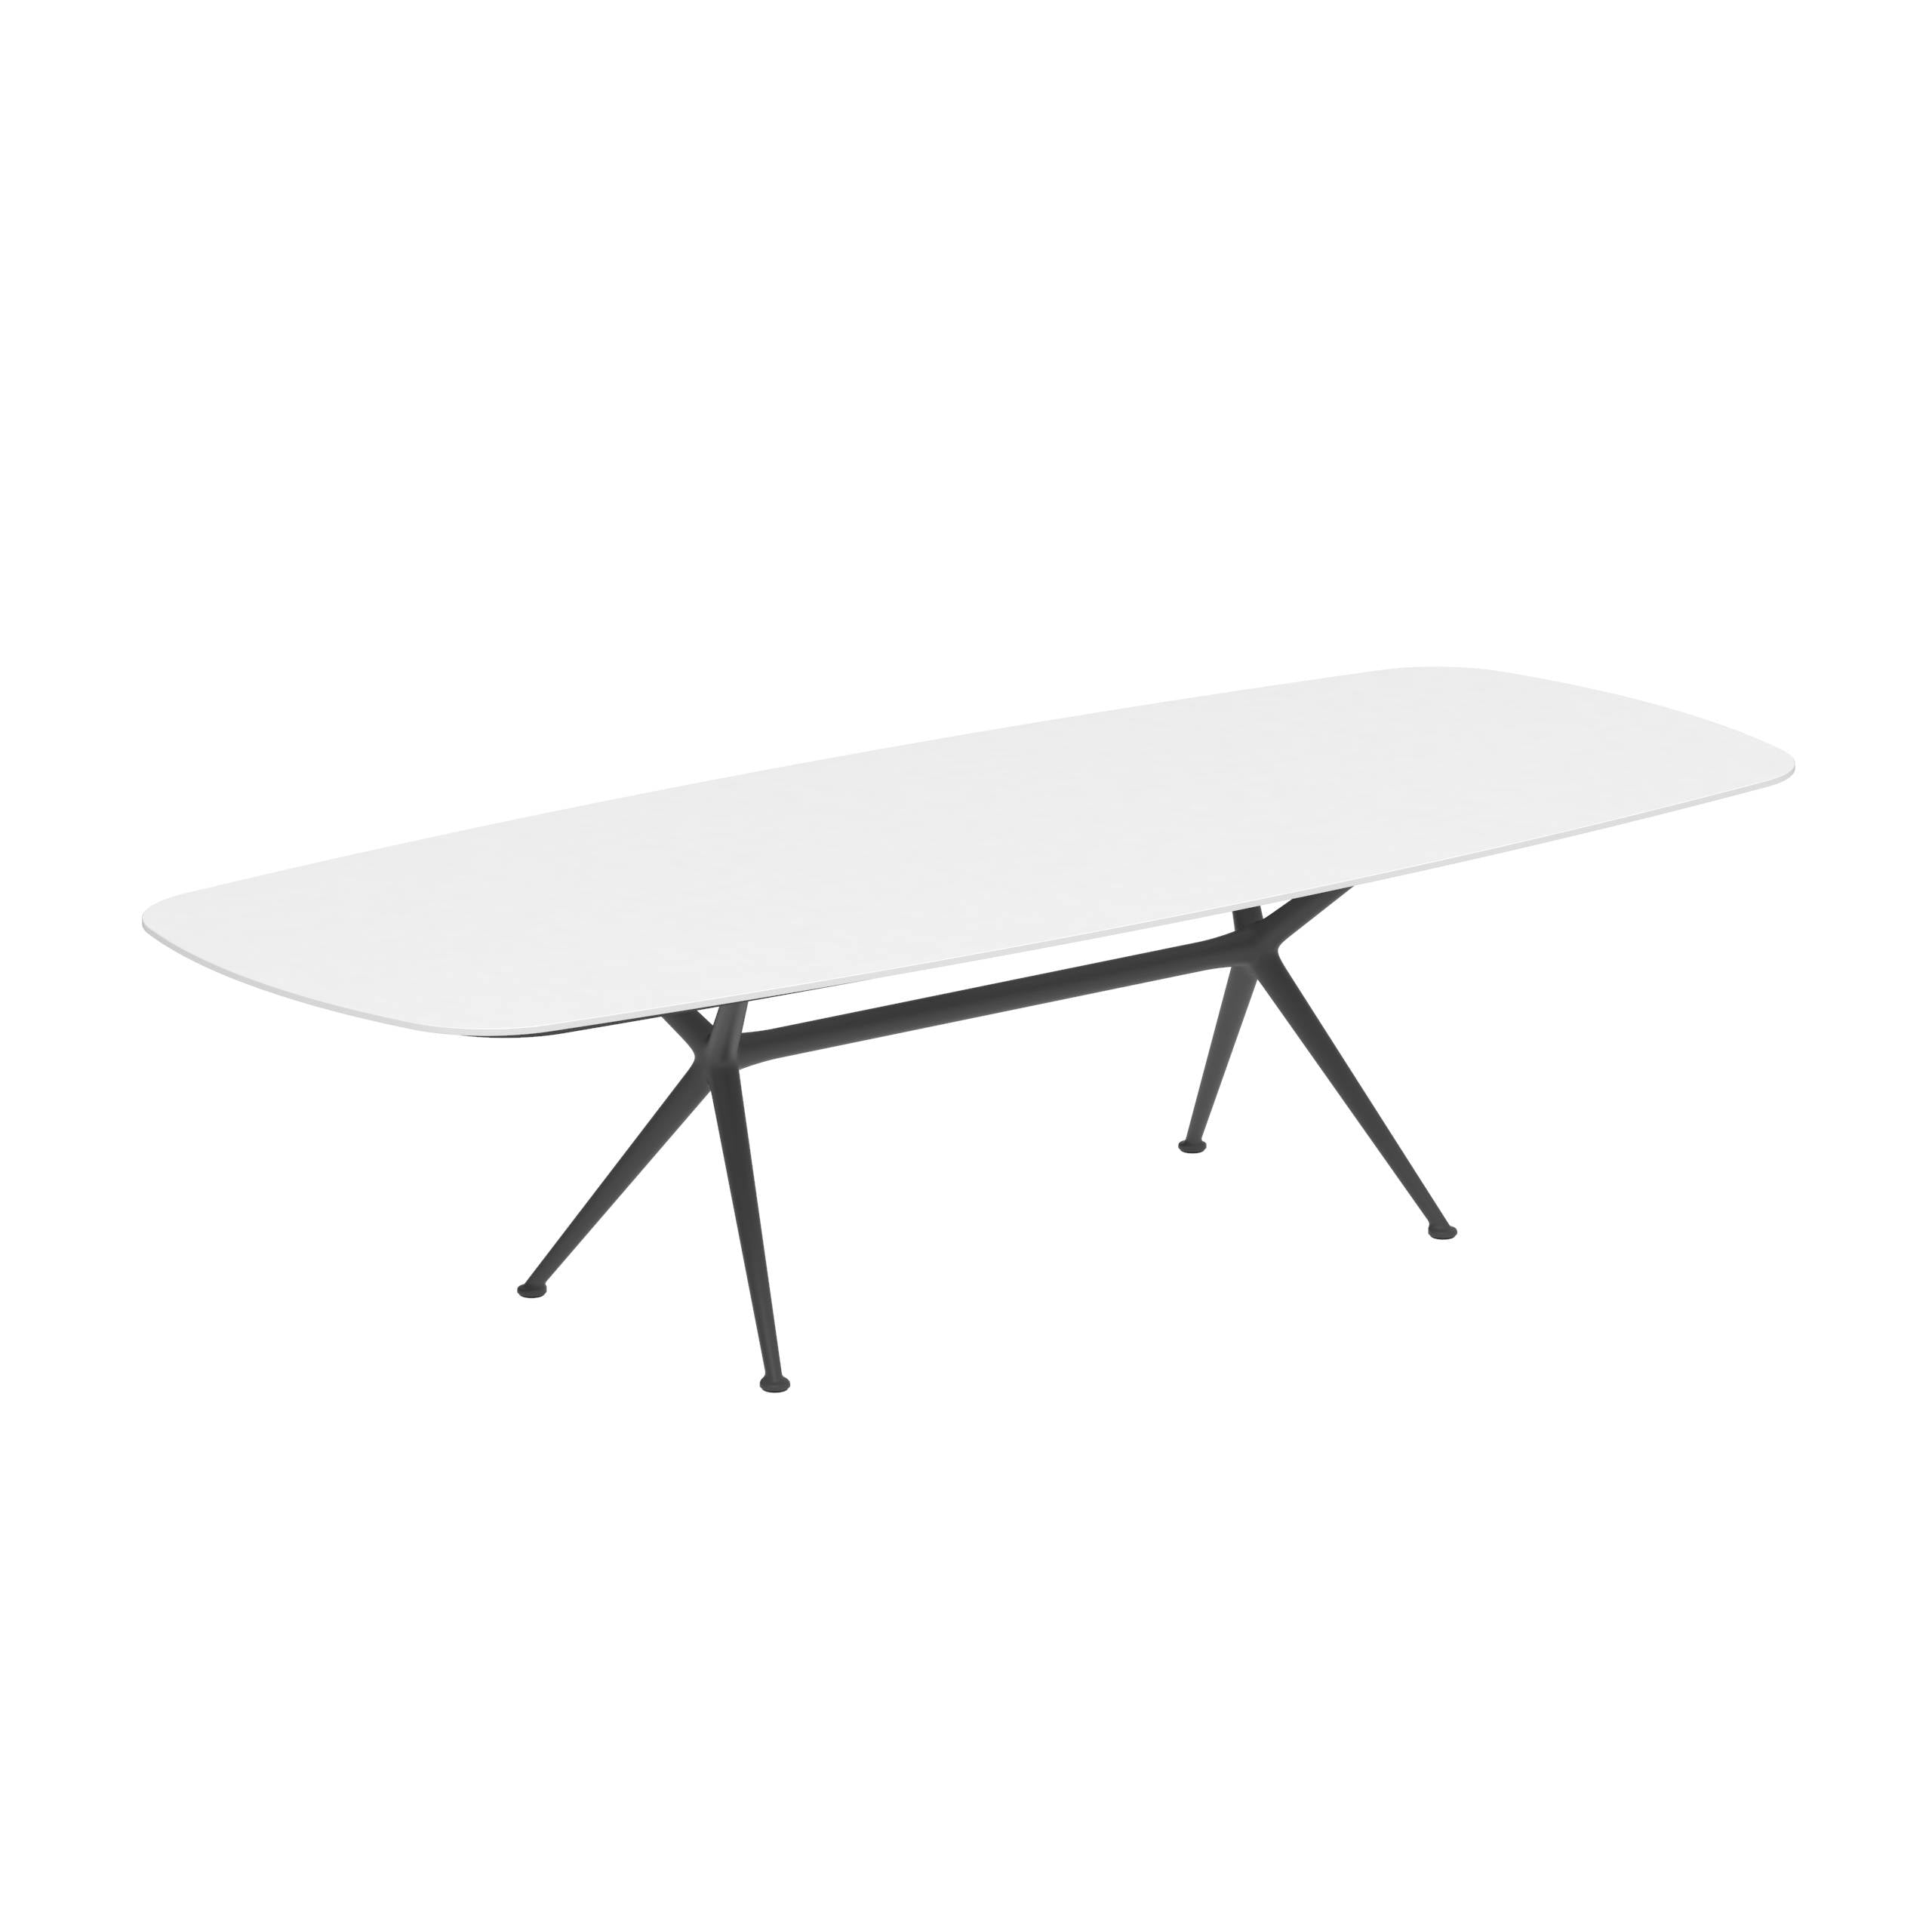 Exes Table 300x120cm Alu Legs Anthracite - Table Top Ceramic White